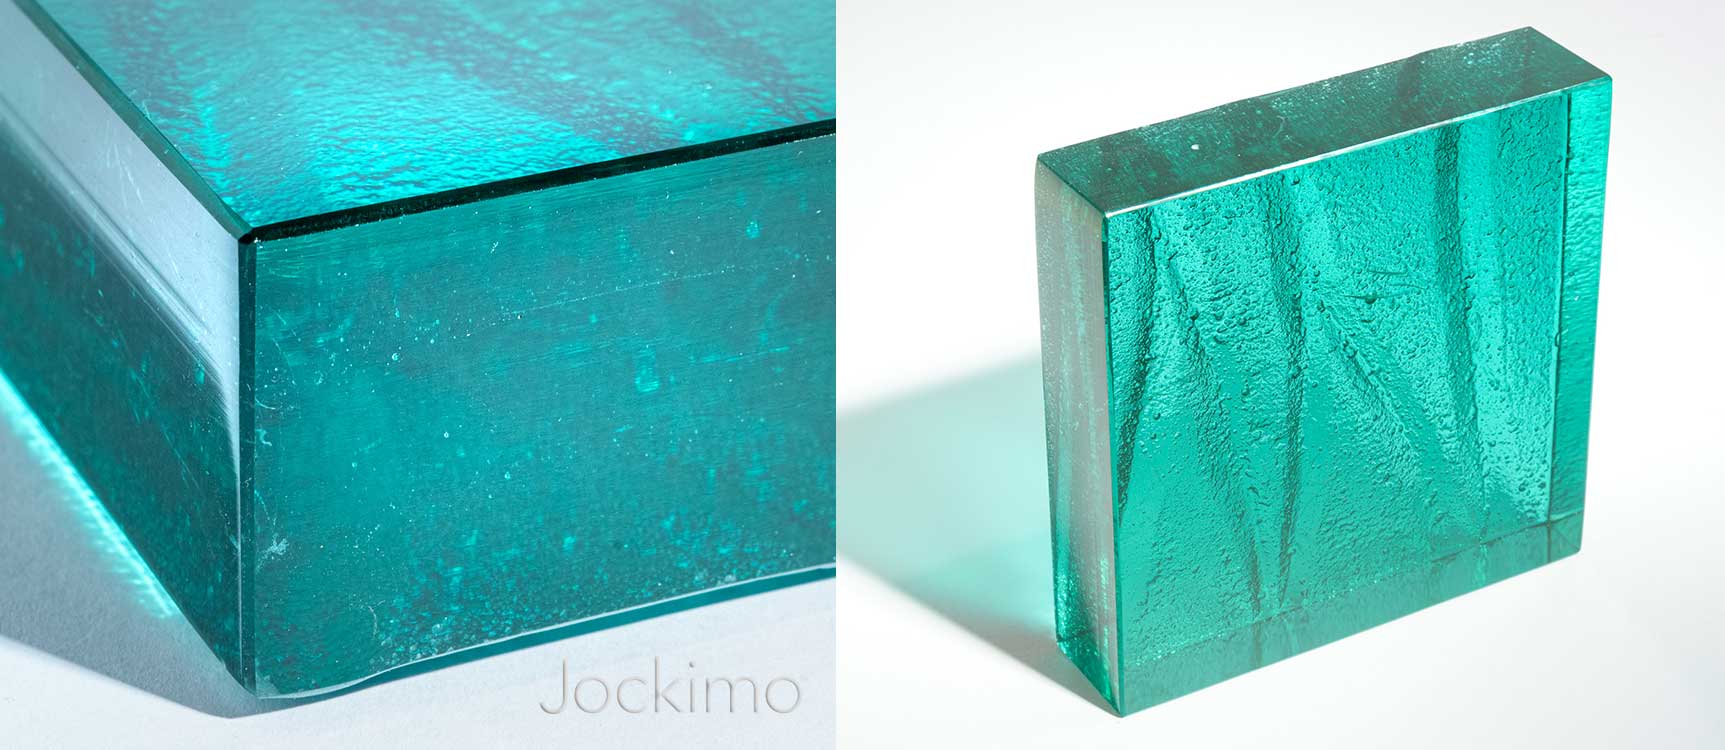 TRUE colors architectural glass aqua